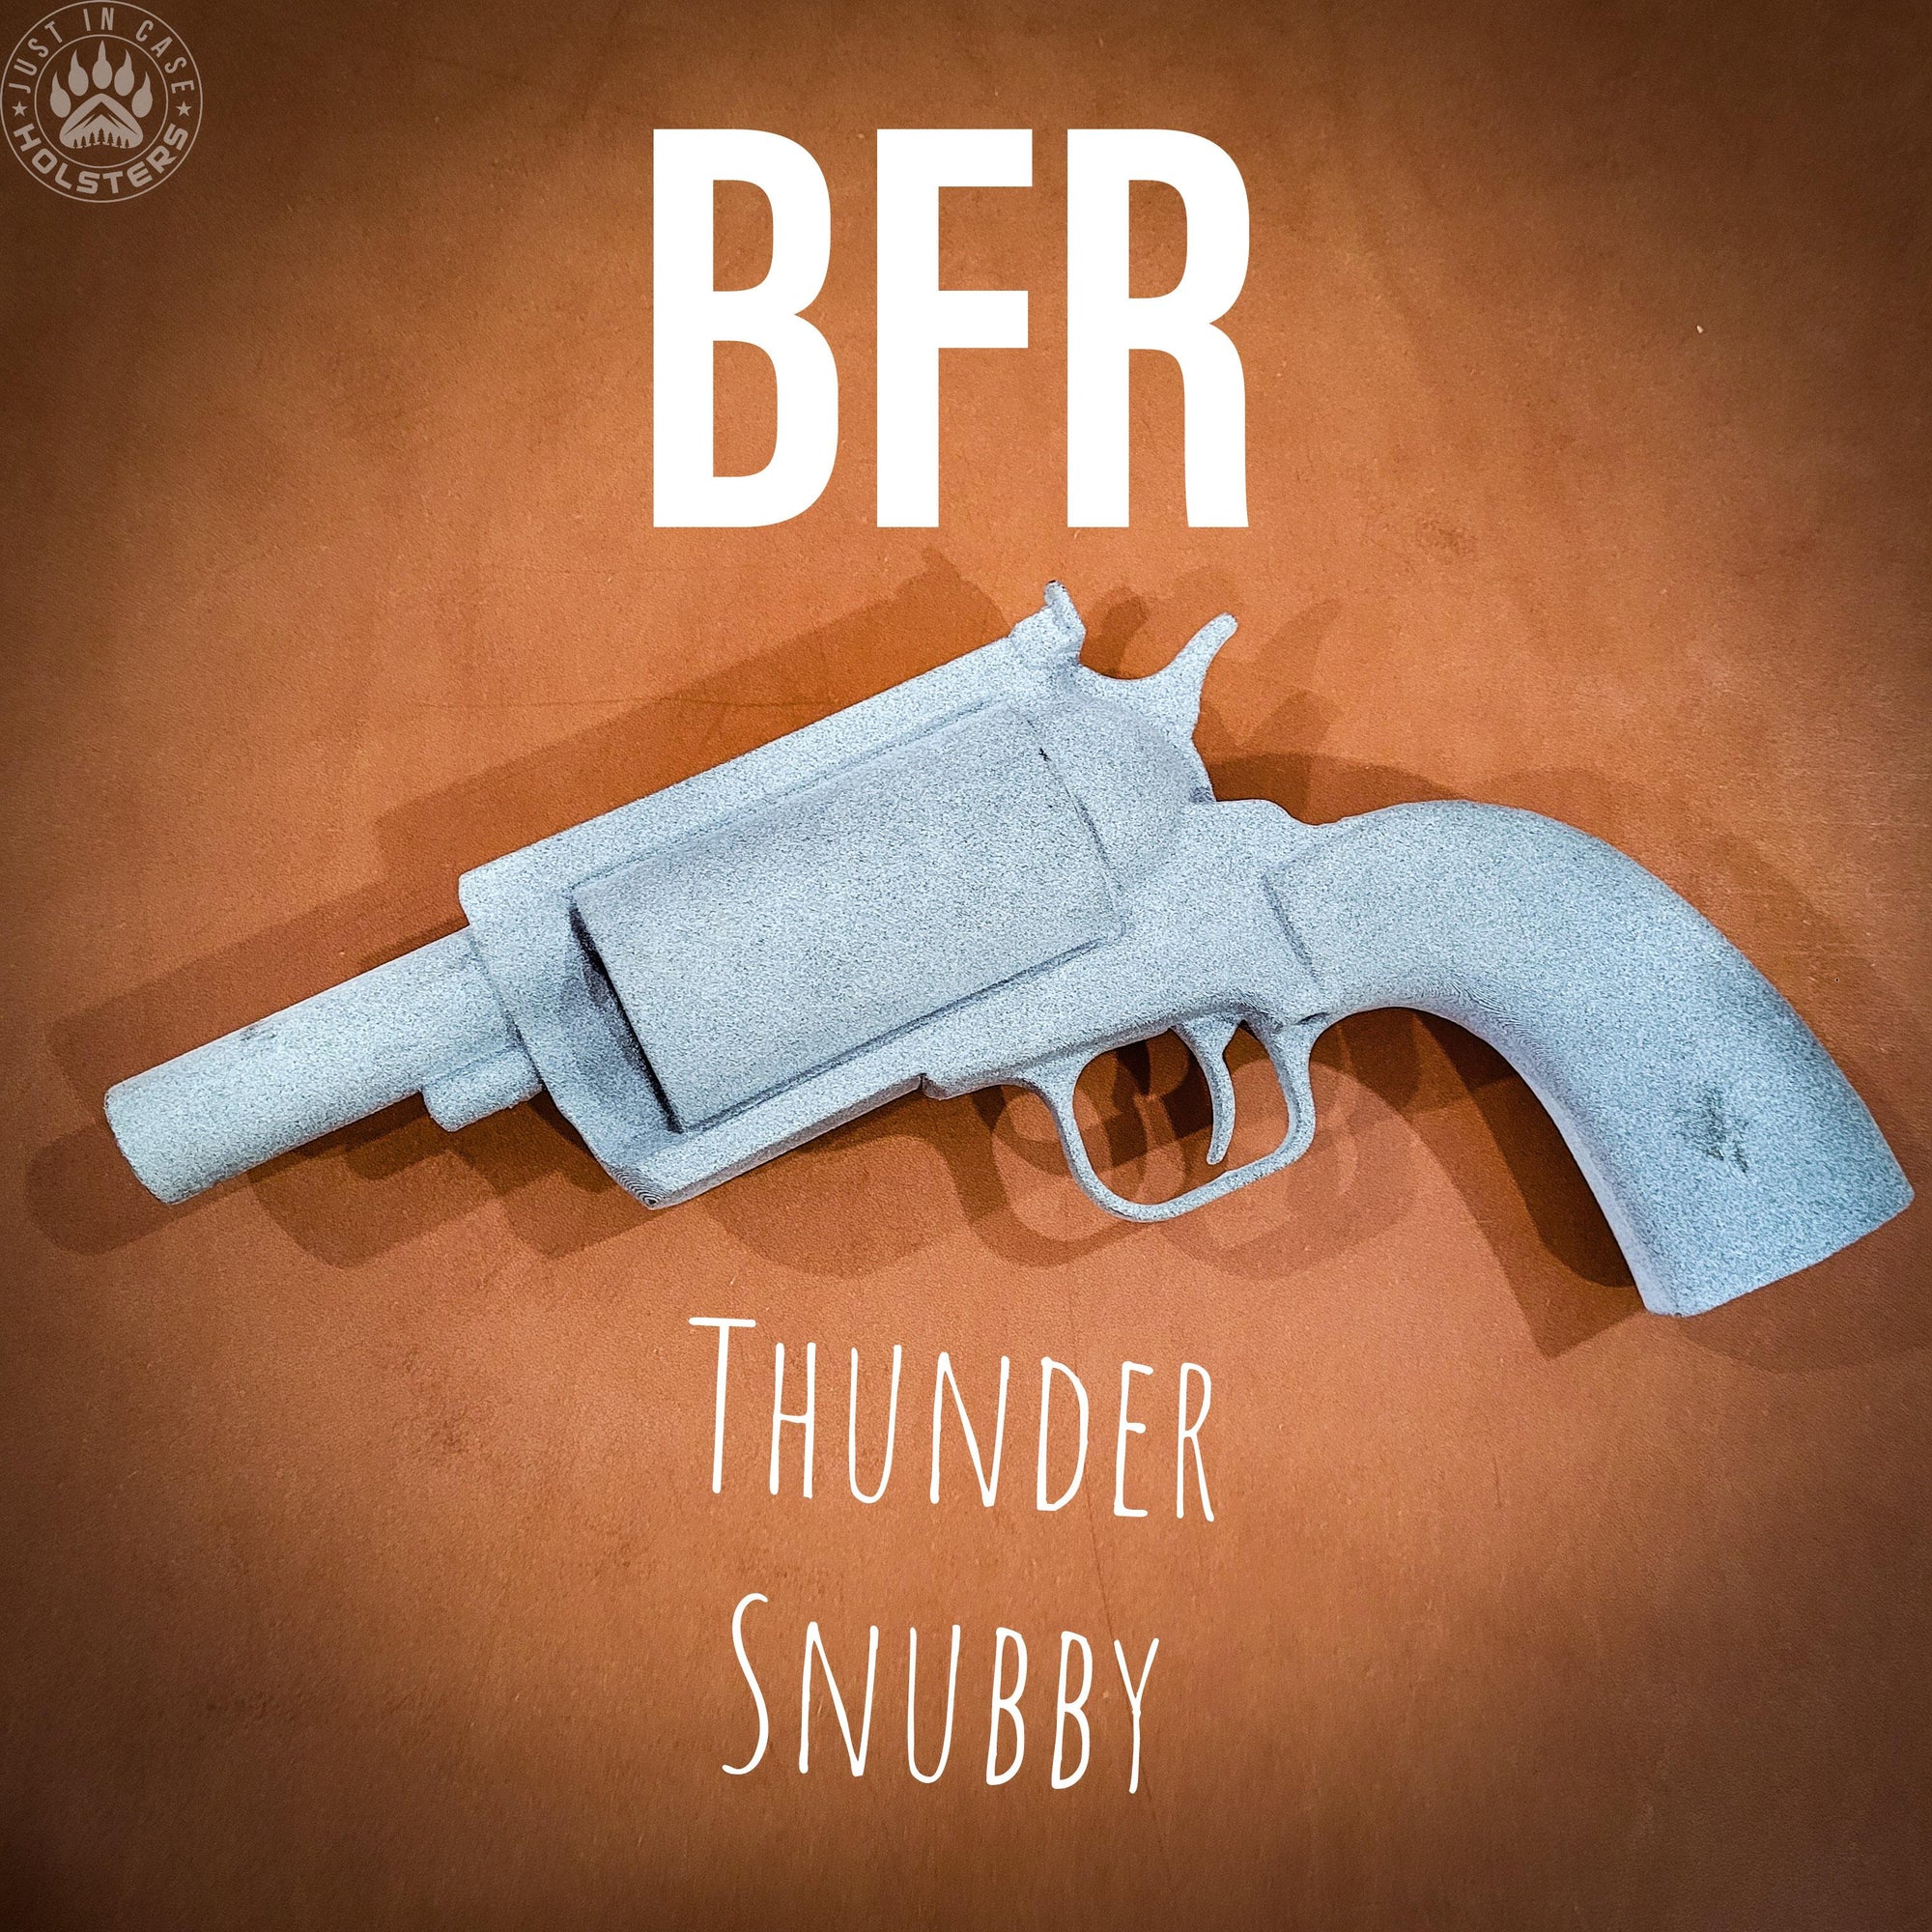 Now Offering BFR Thunder Snubby Holsters